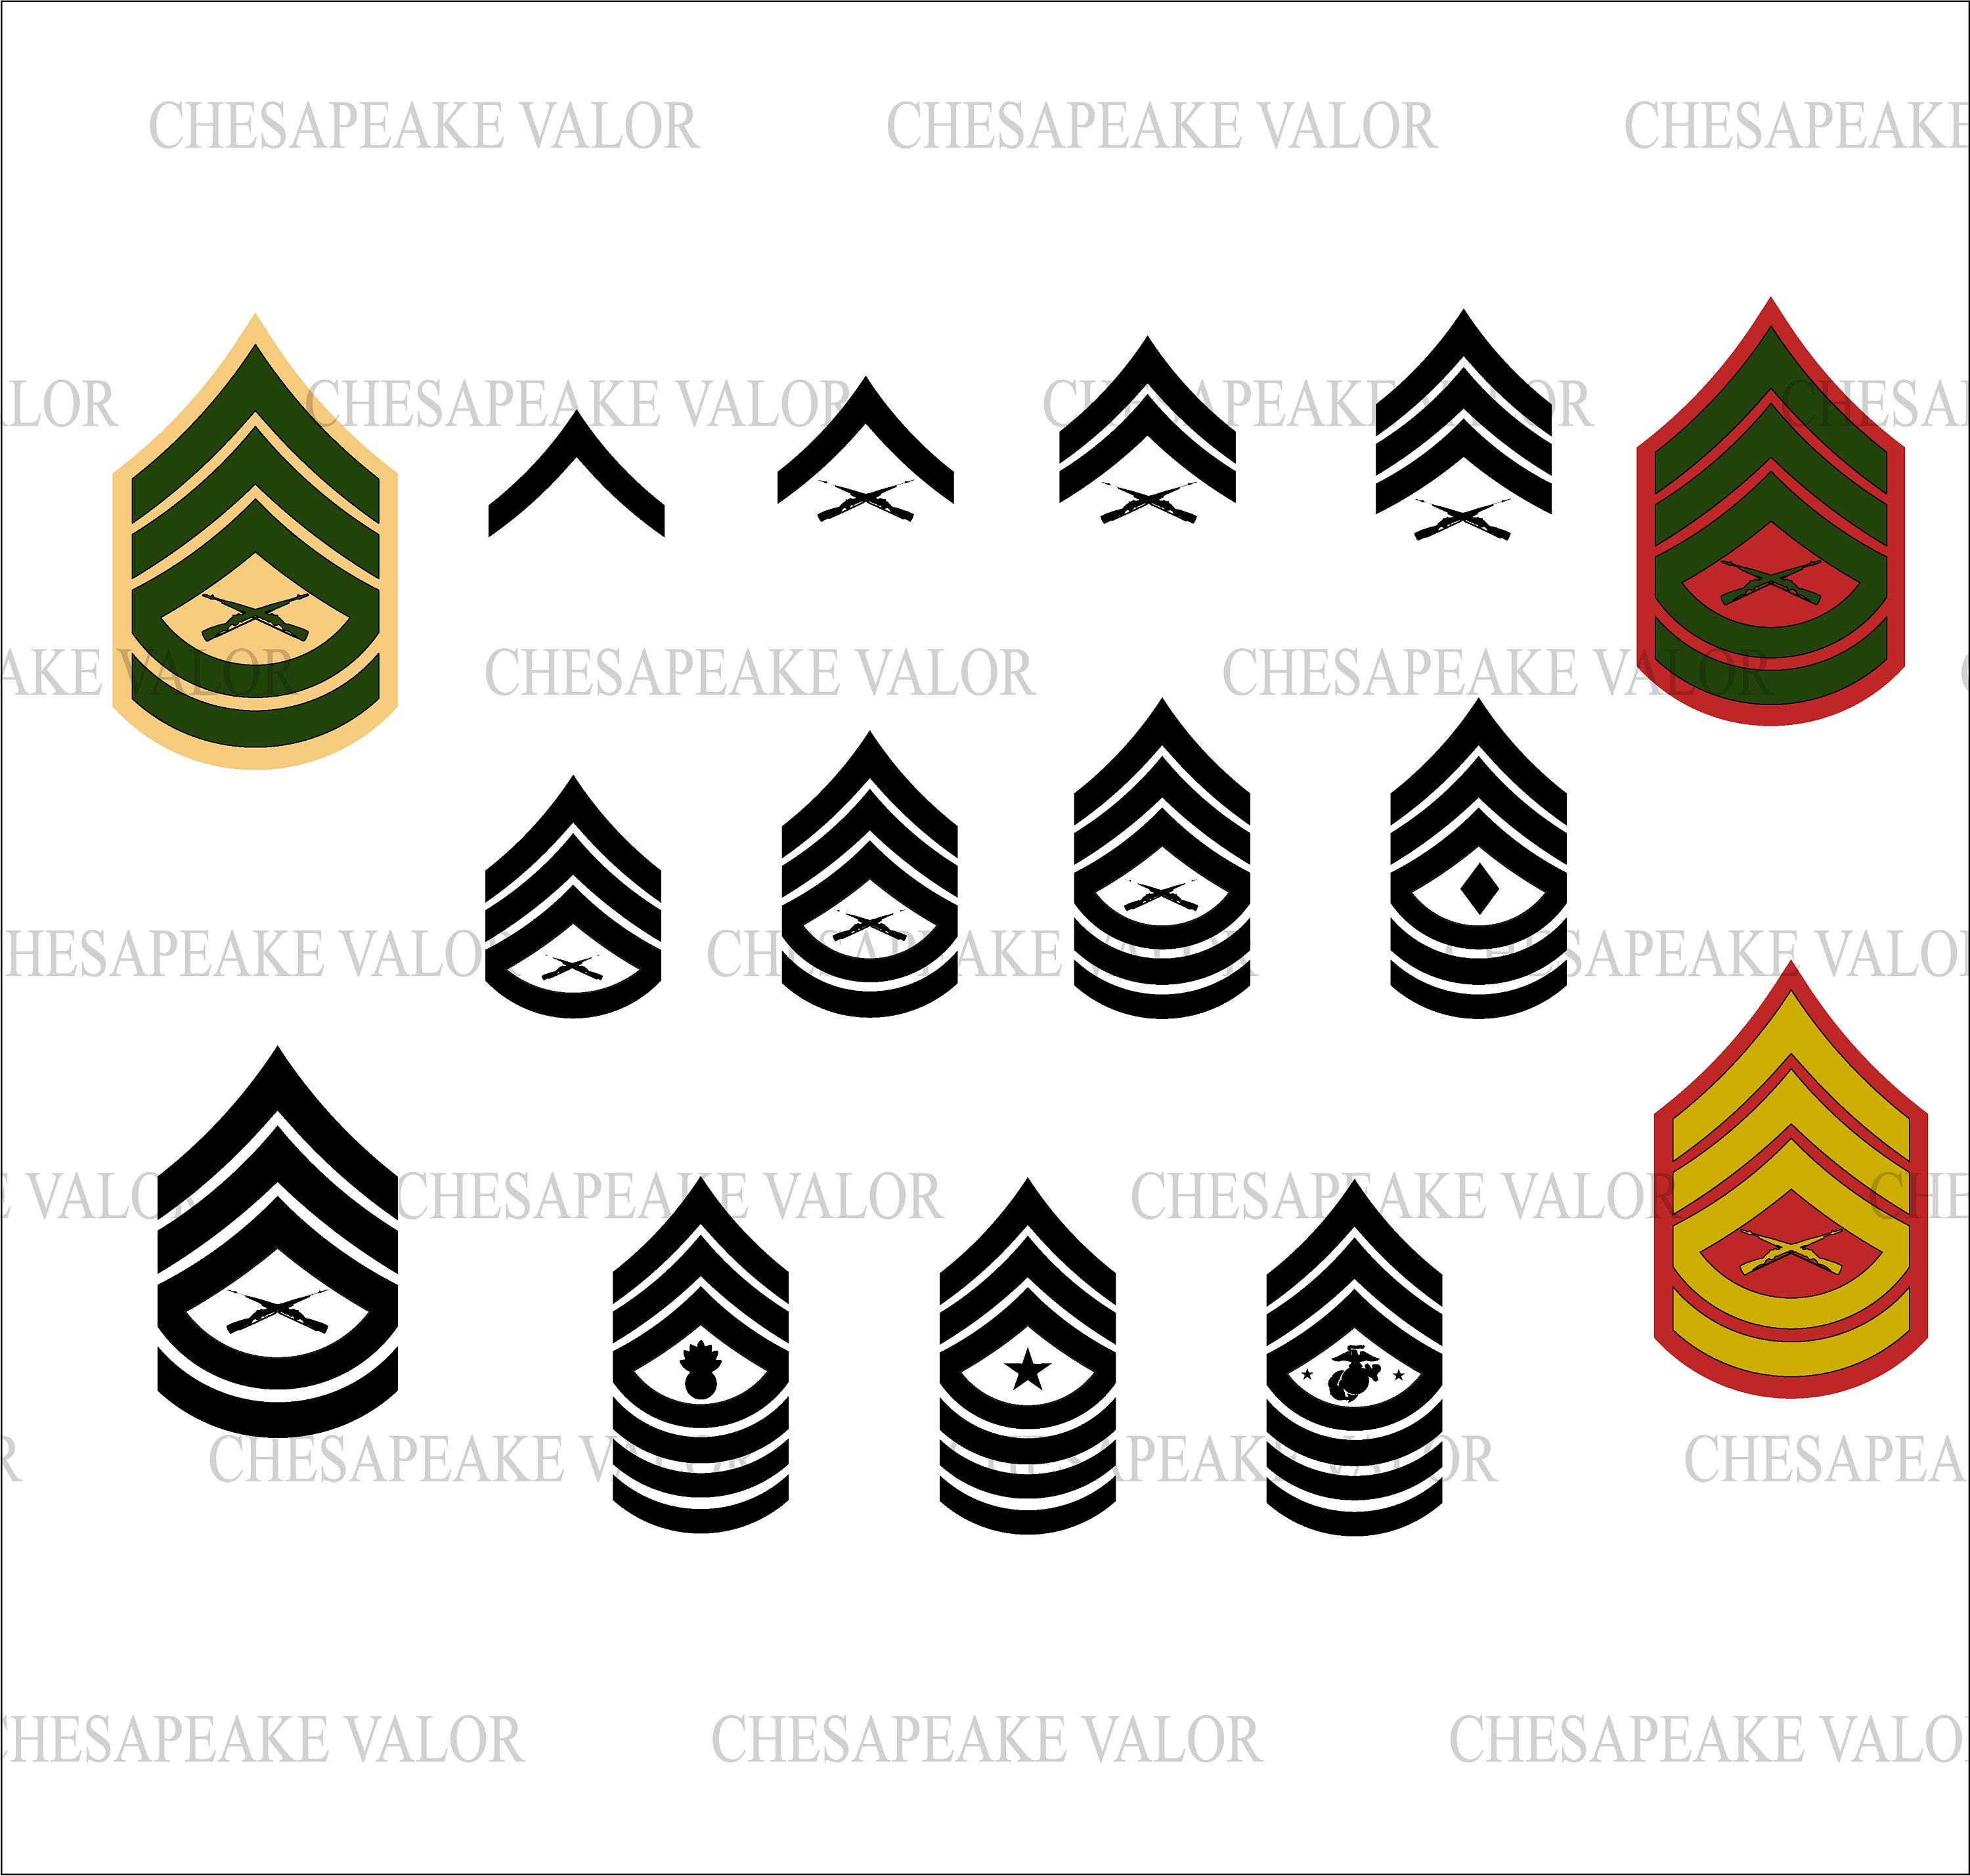 USMC Sergeant rank chevrons stained glass - campestre.al.gov.br